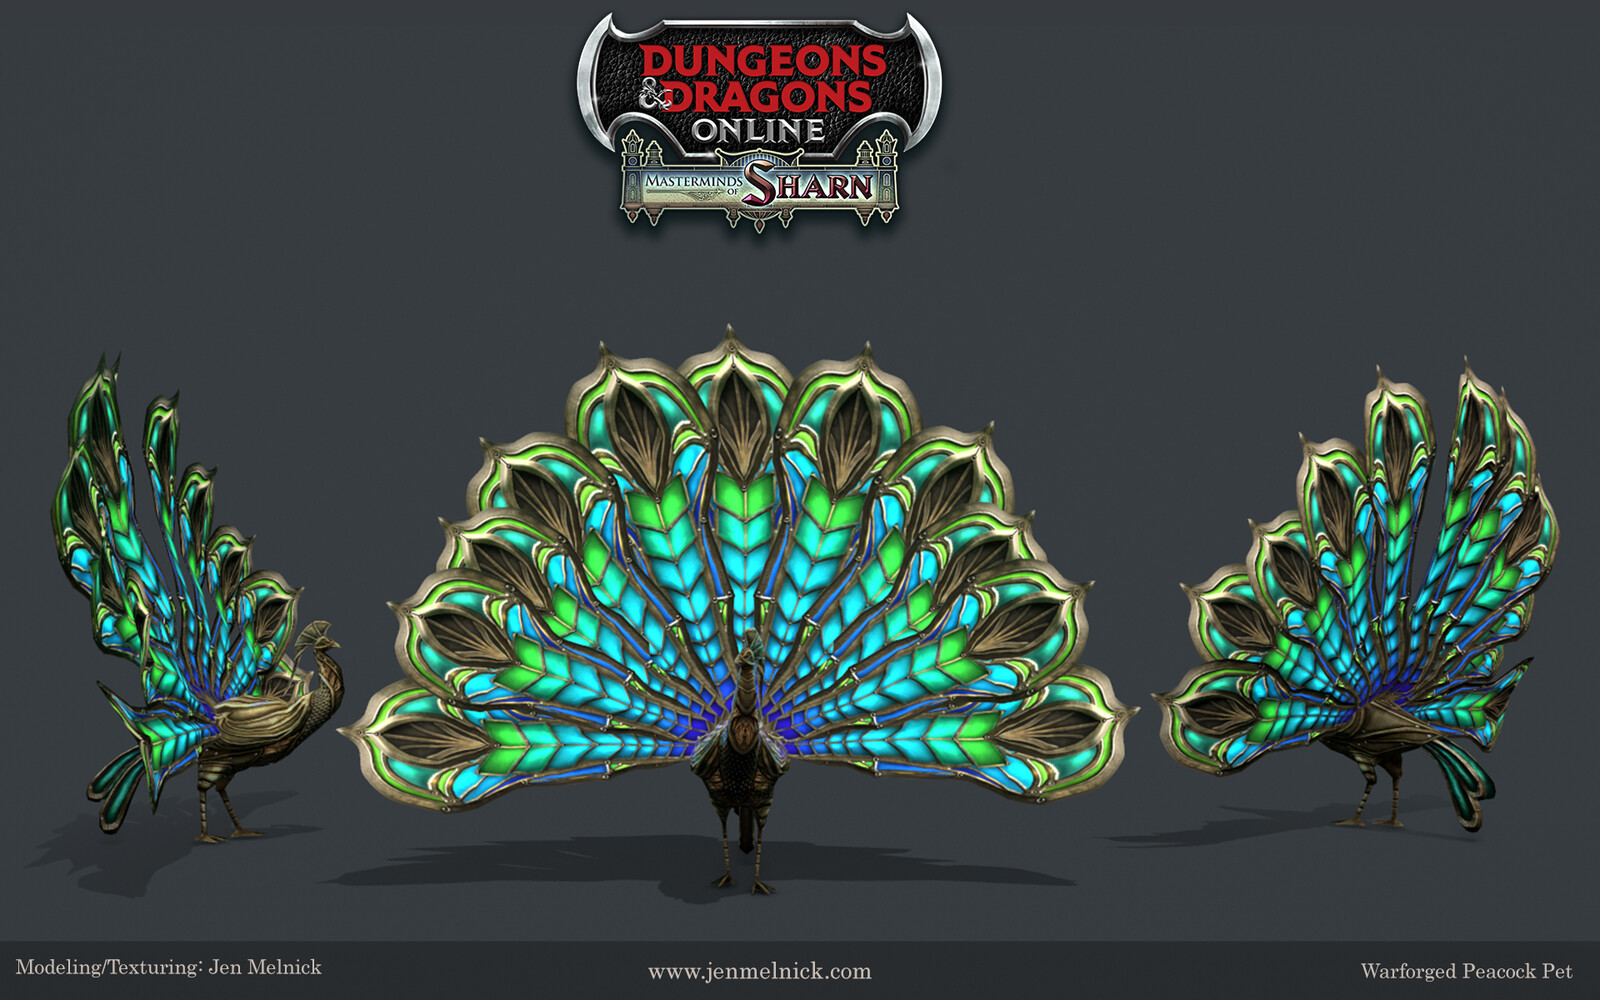 Warforged Peacock Pet
Dungeons and Dragons Online
Masterminds of Sharn Expansion 
Ultimate Fan Bundle Pet Reward
Marmoset Render
